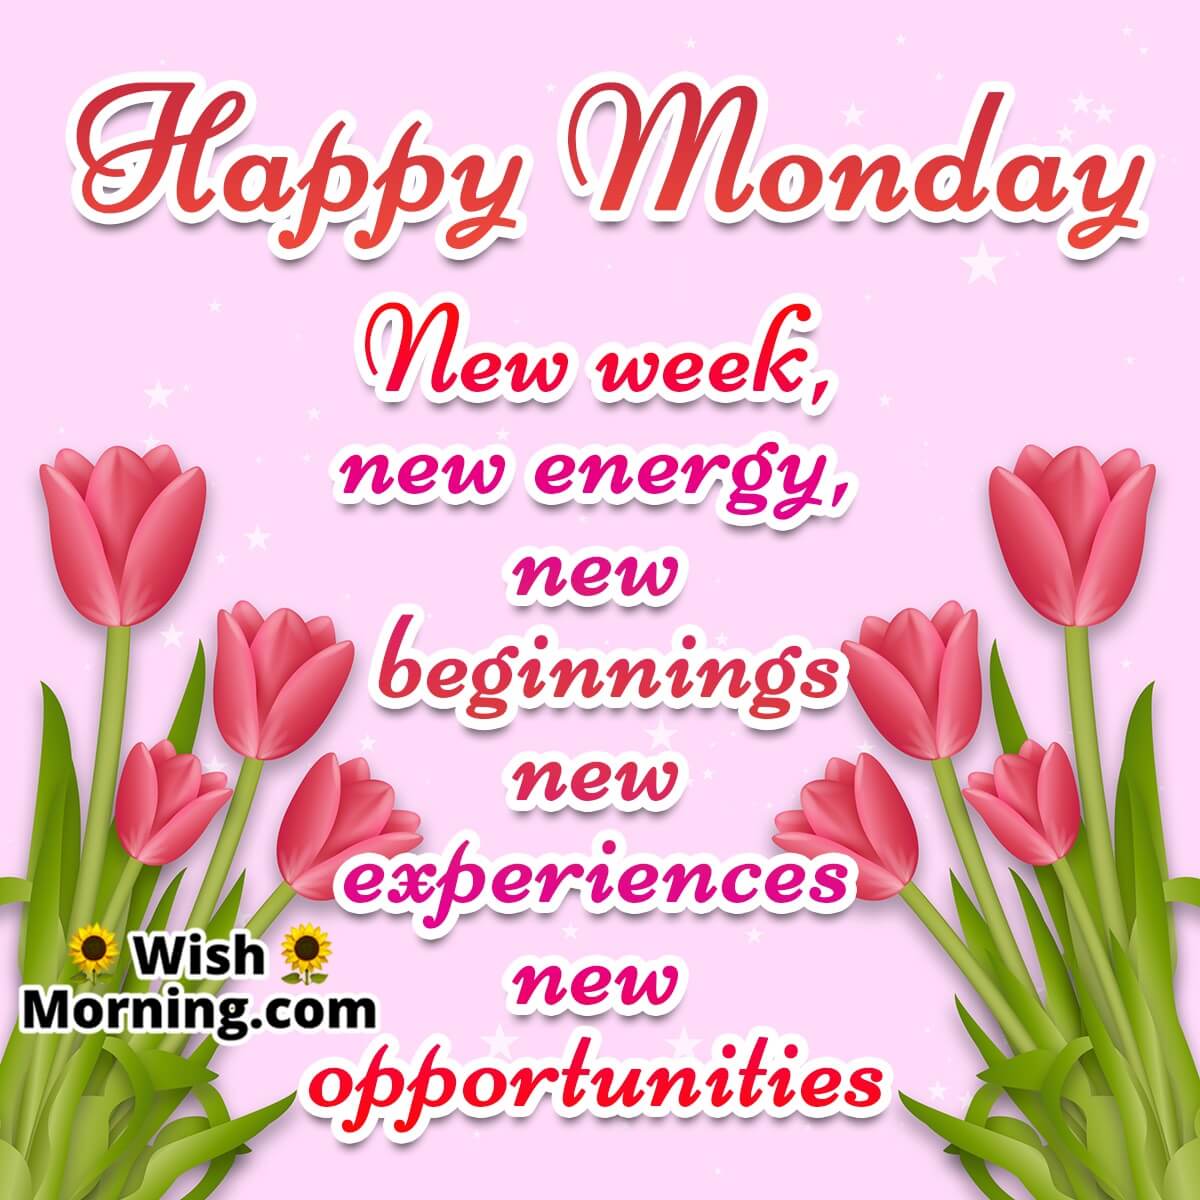 Happy Monday New Week Message